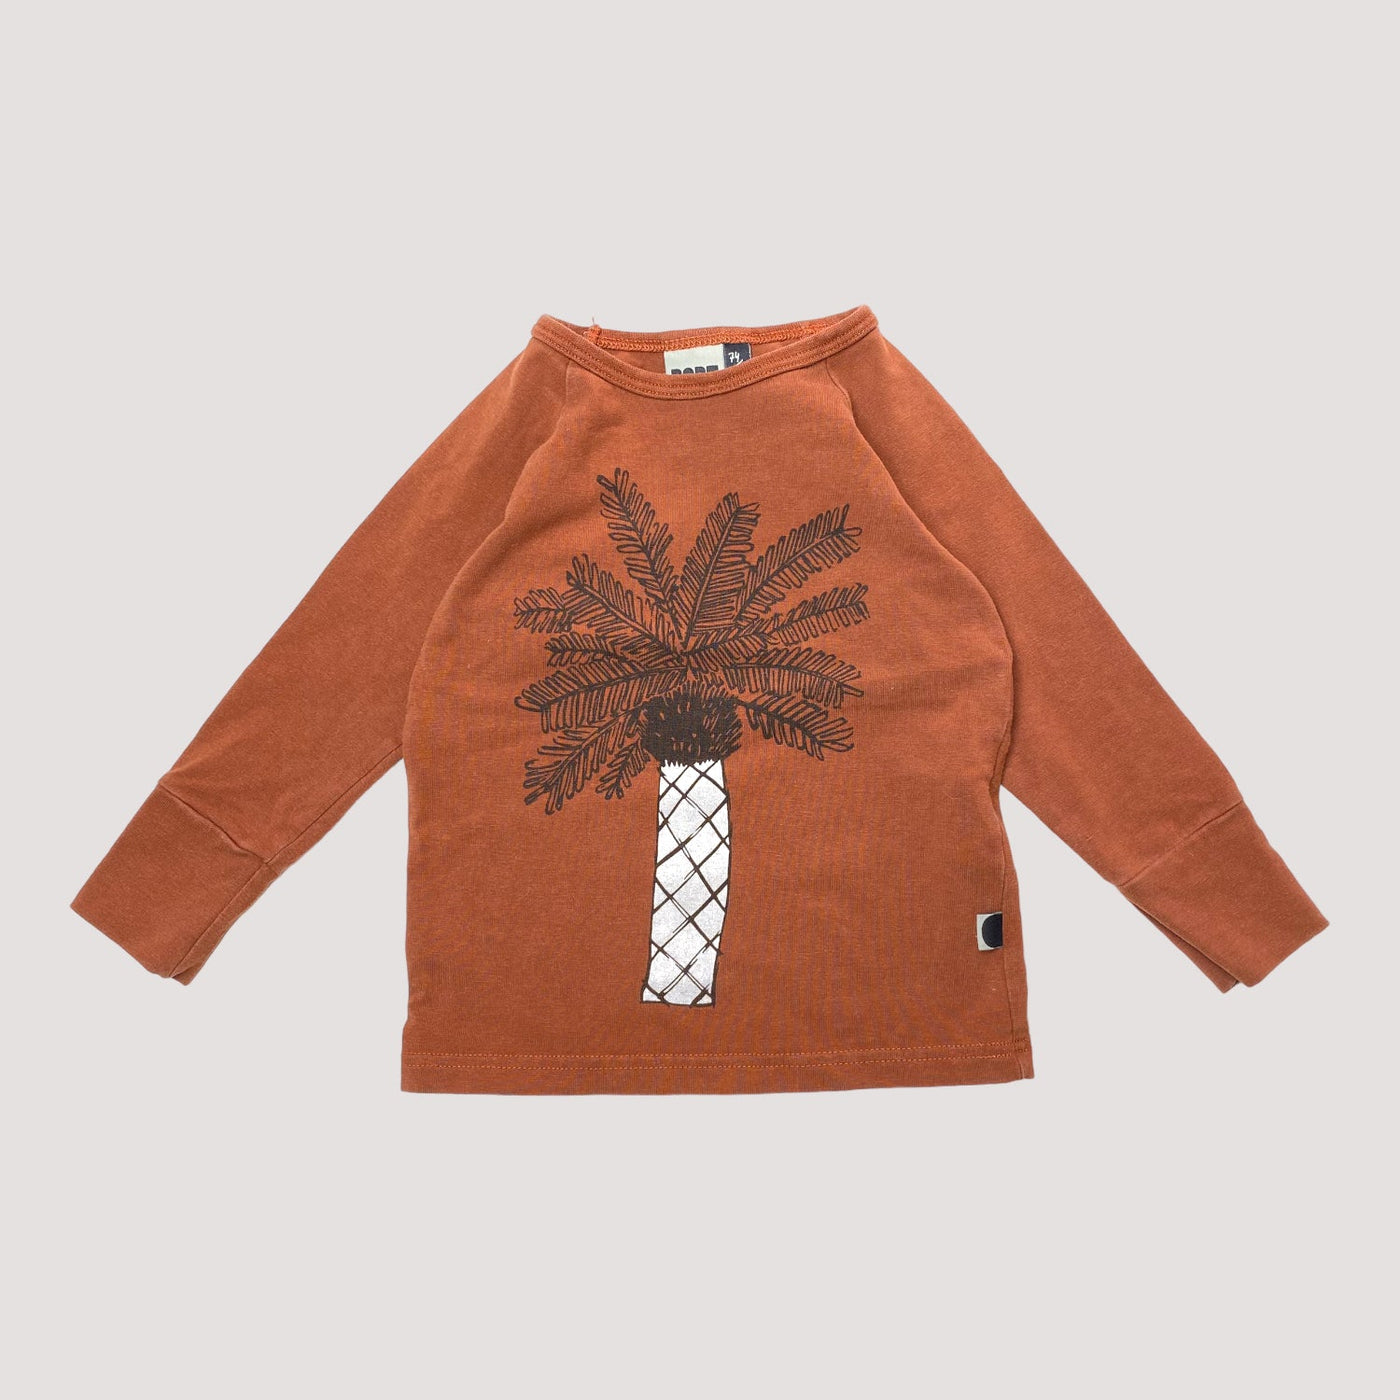 Papu shirt, palm tree | 74/80cm